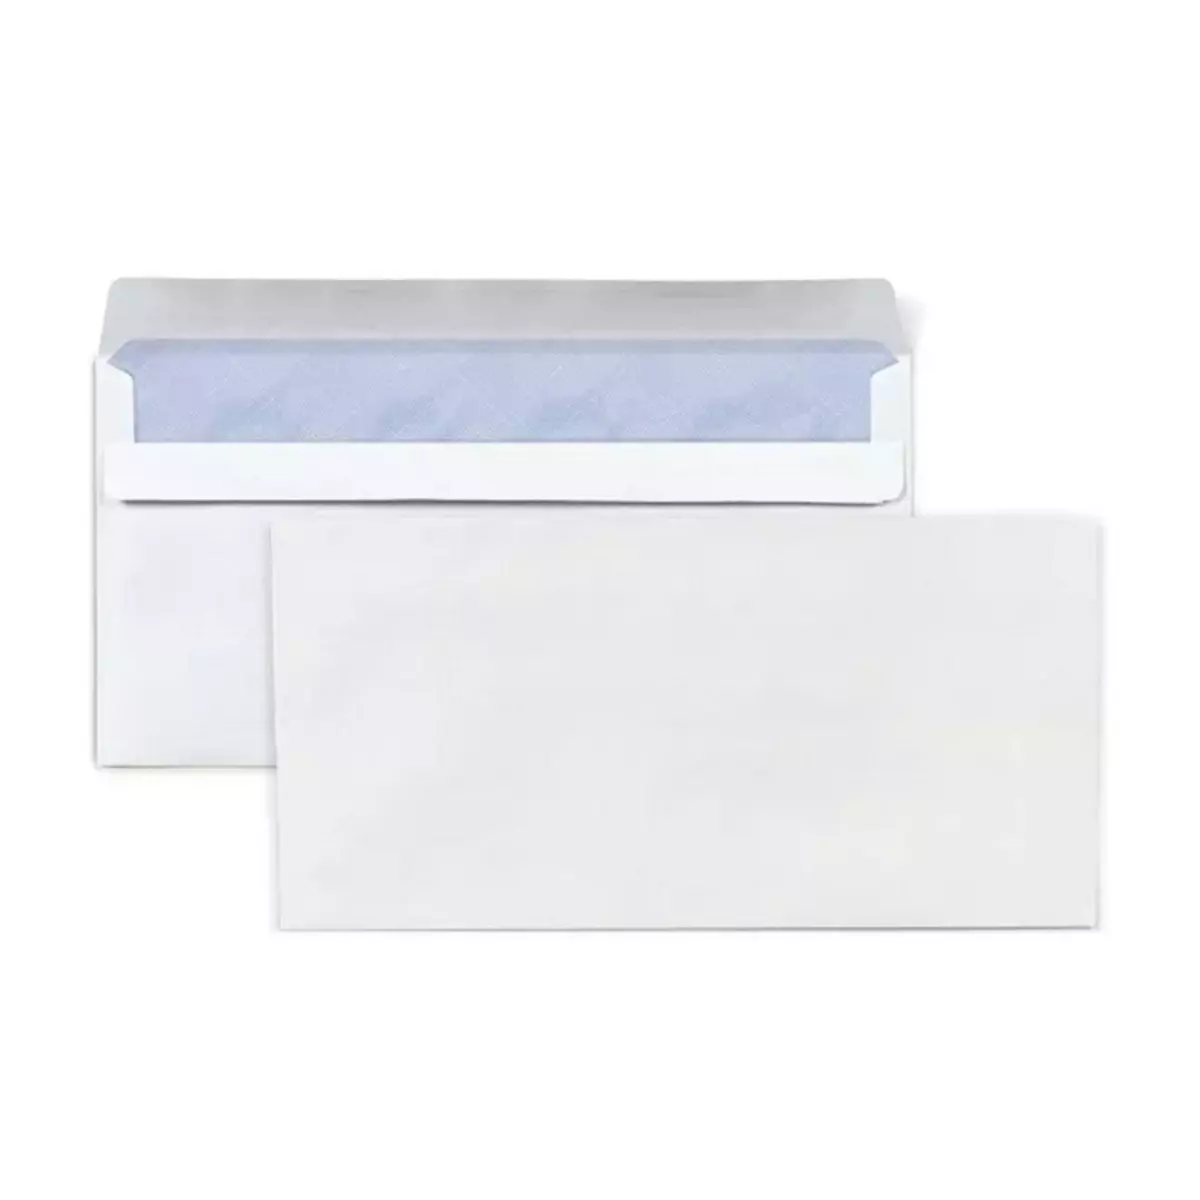 RAJA 500 enveloppes blanches en papier - 11 x 22 cm